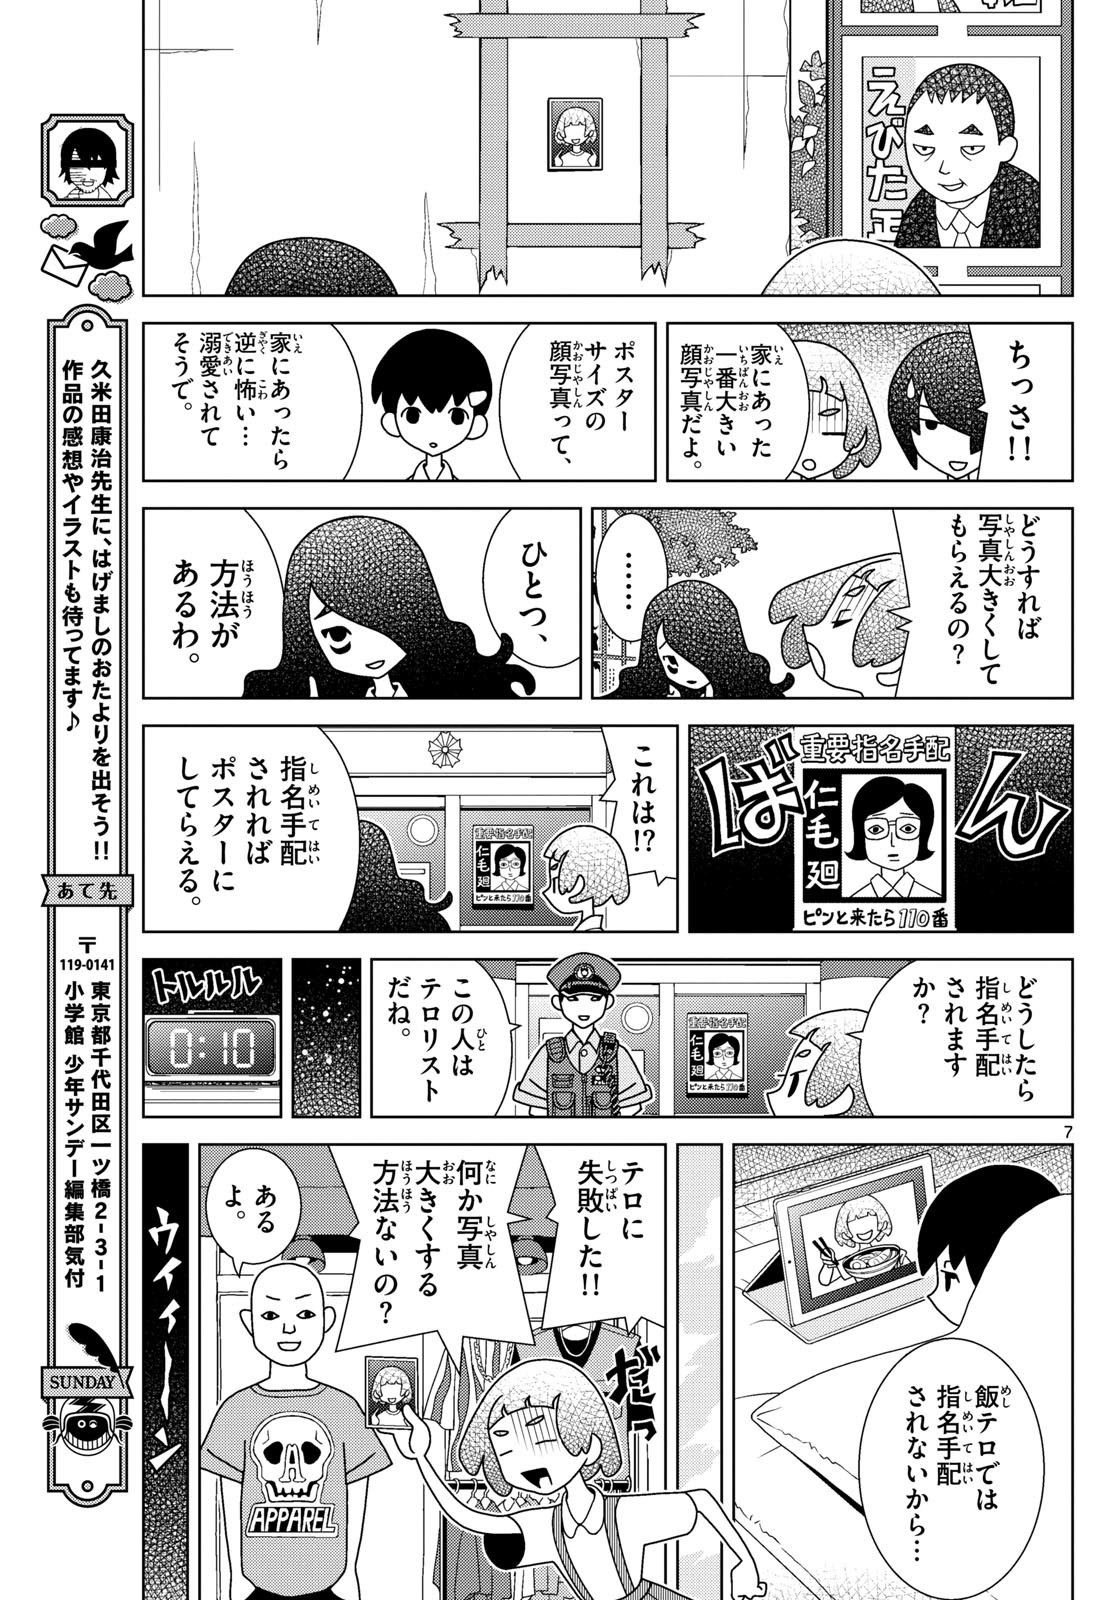 Shibuya Near Family - Chapter 099 - Page 7